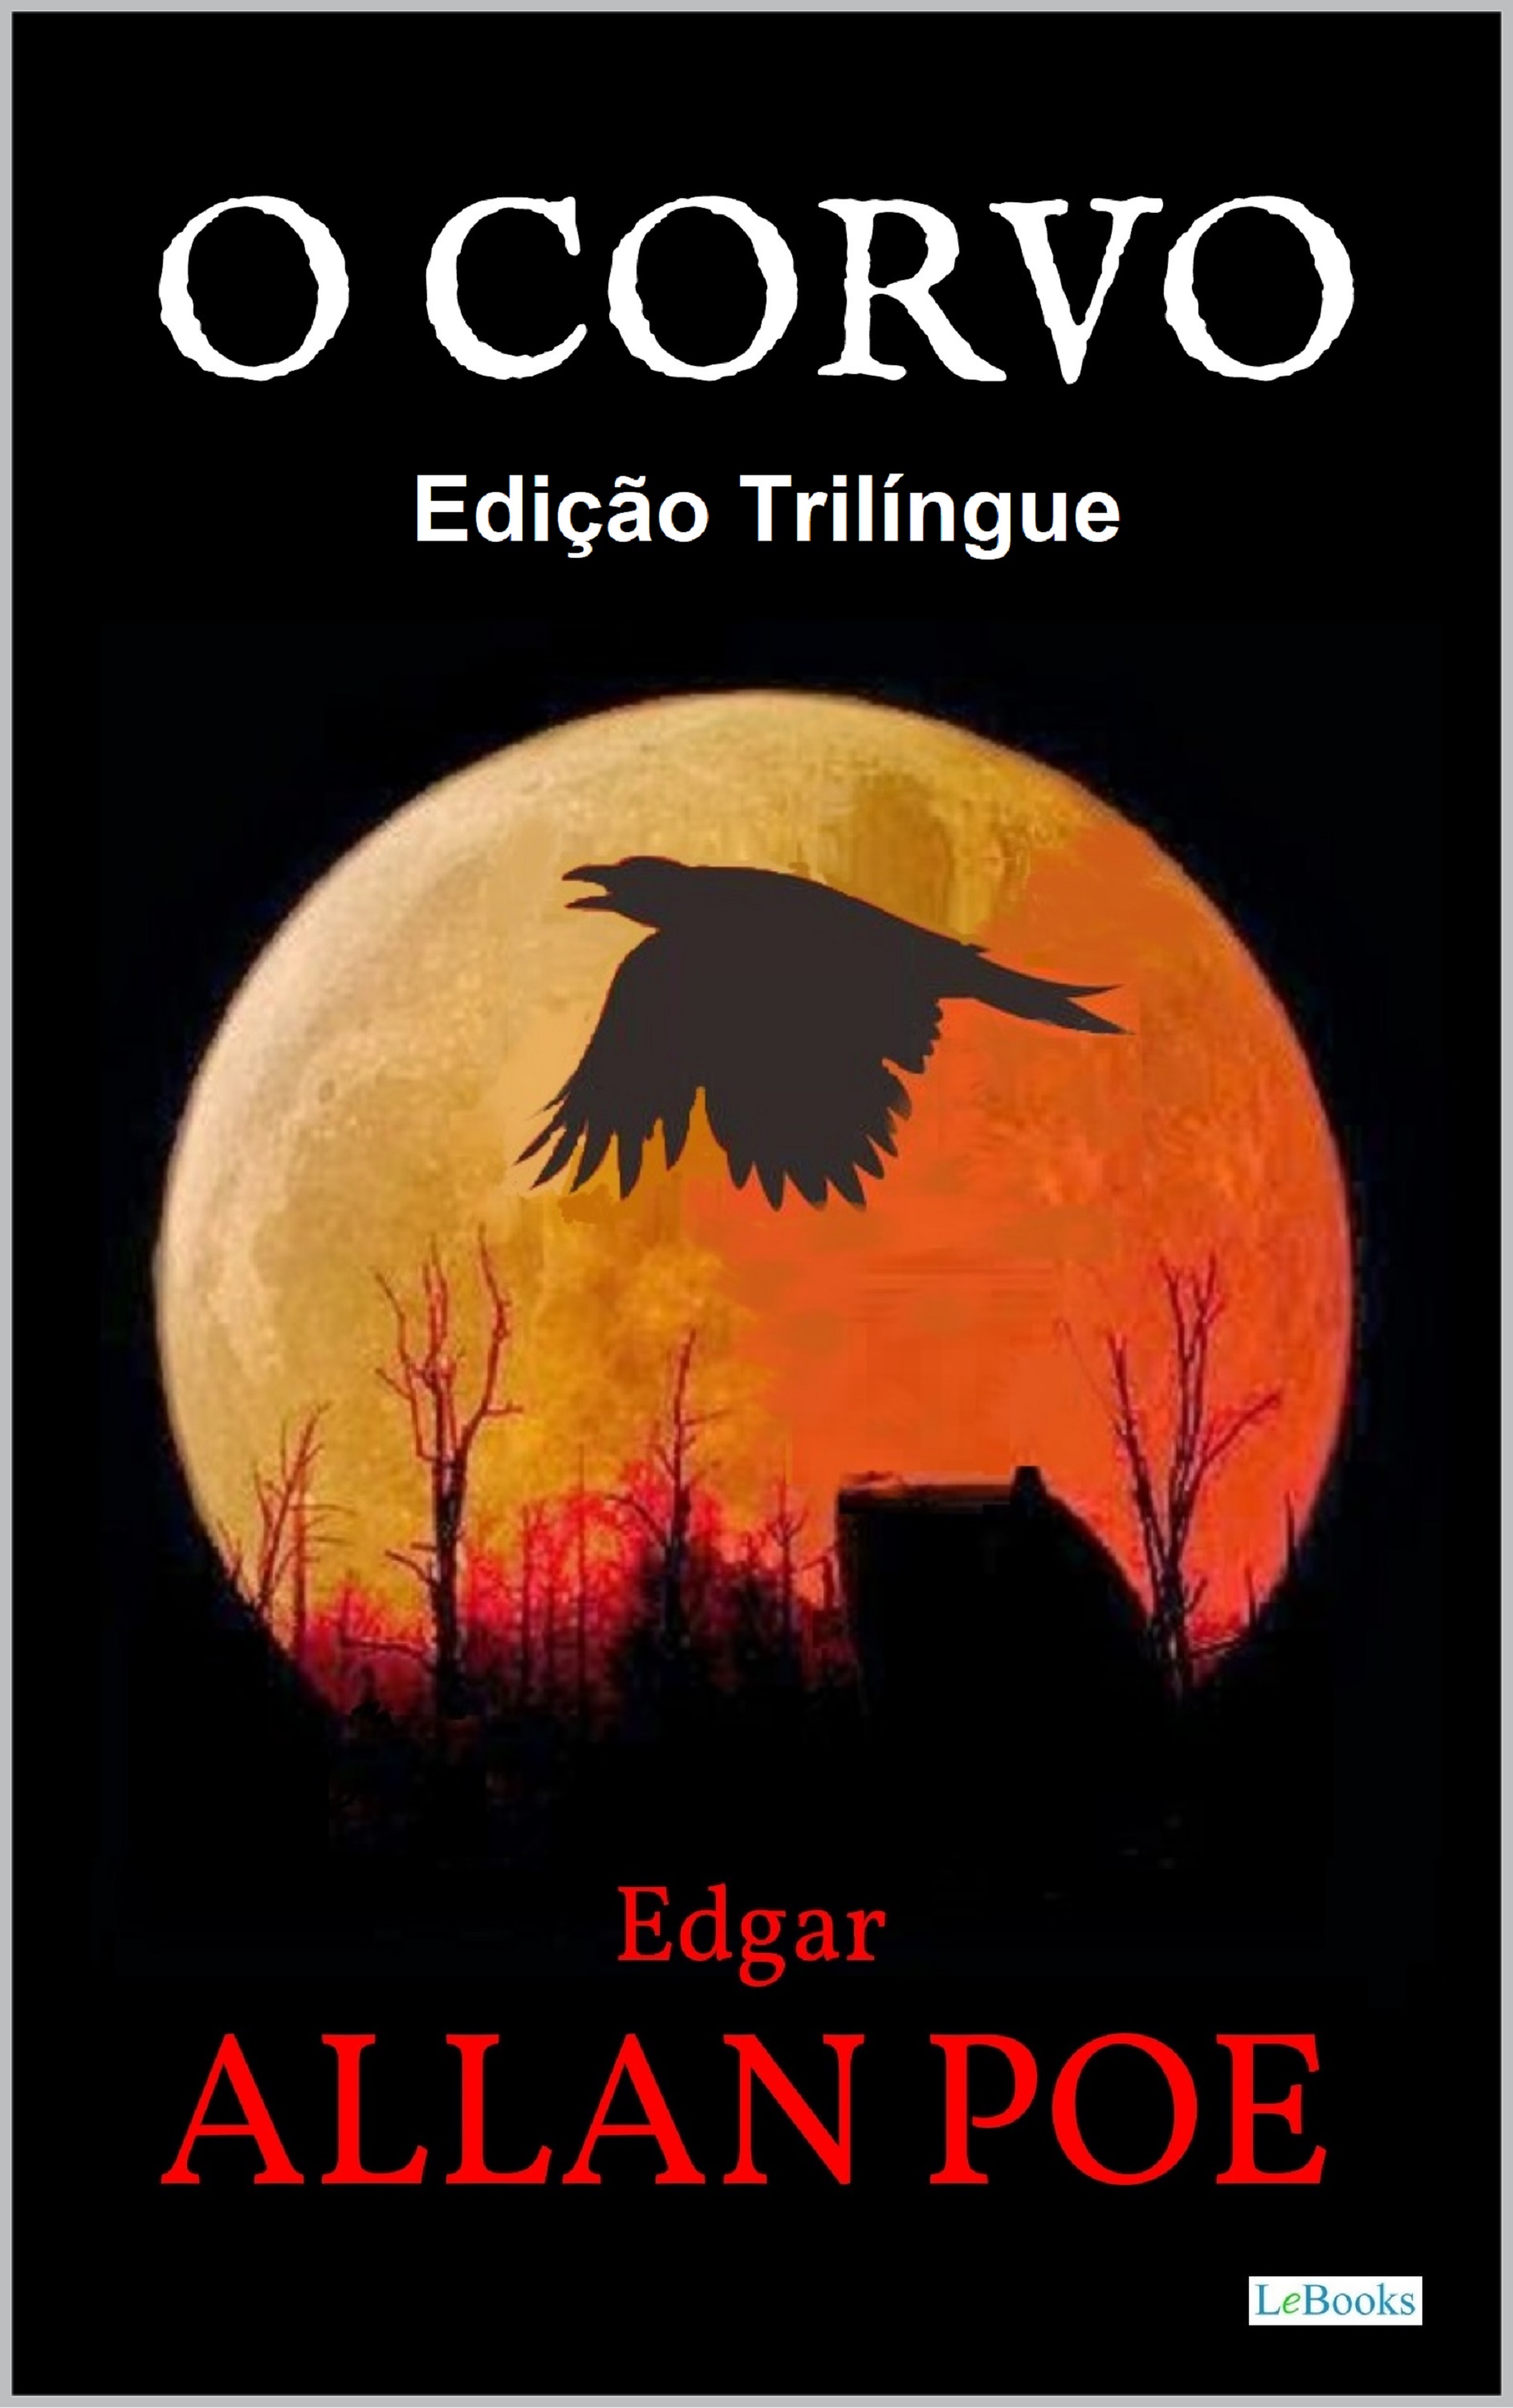 O CORVO Edgar Allan Poe